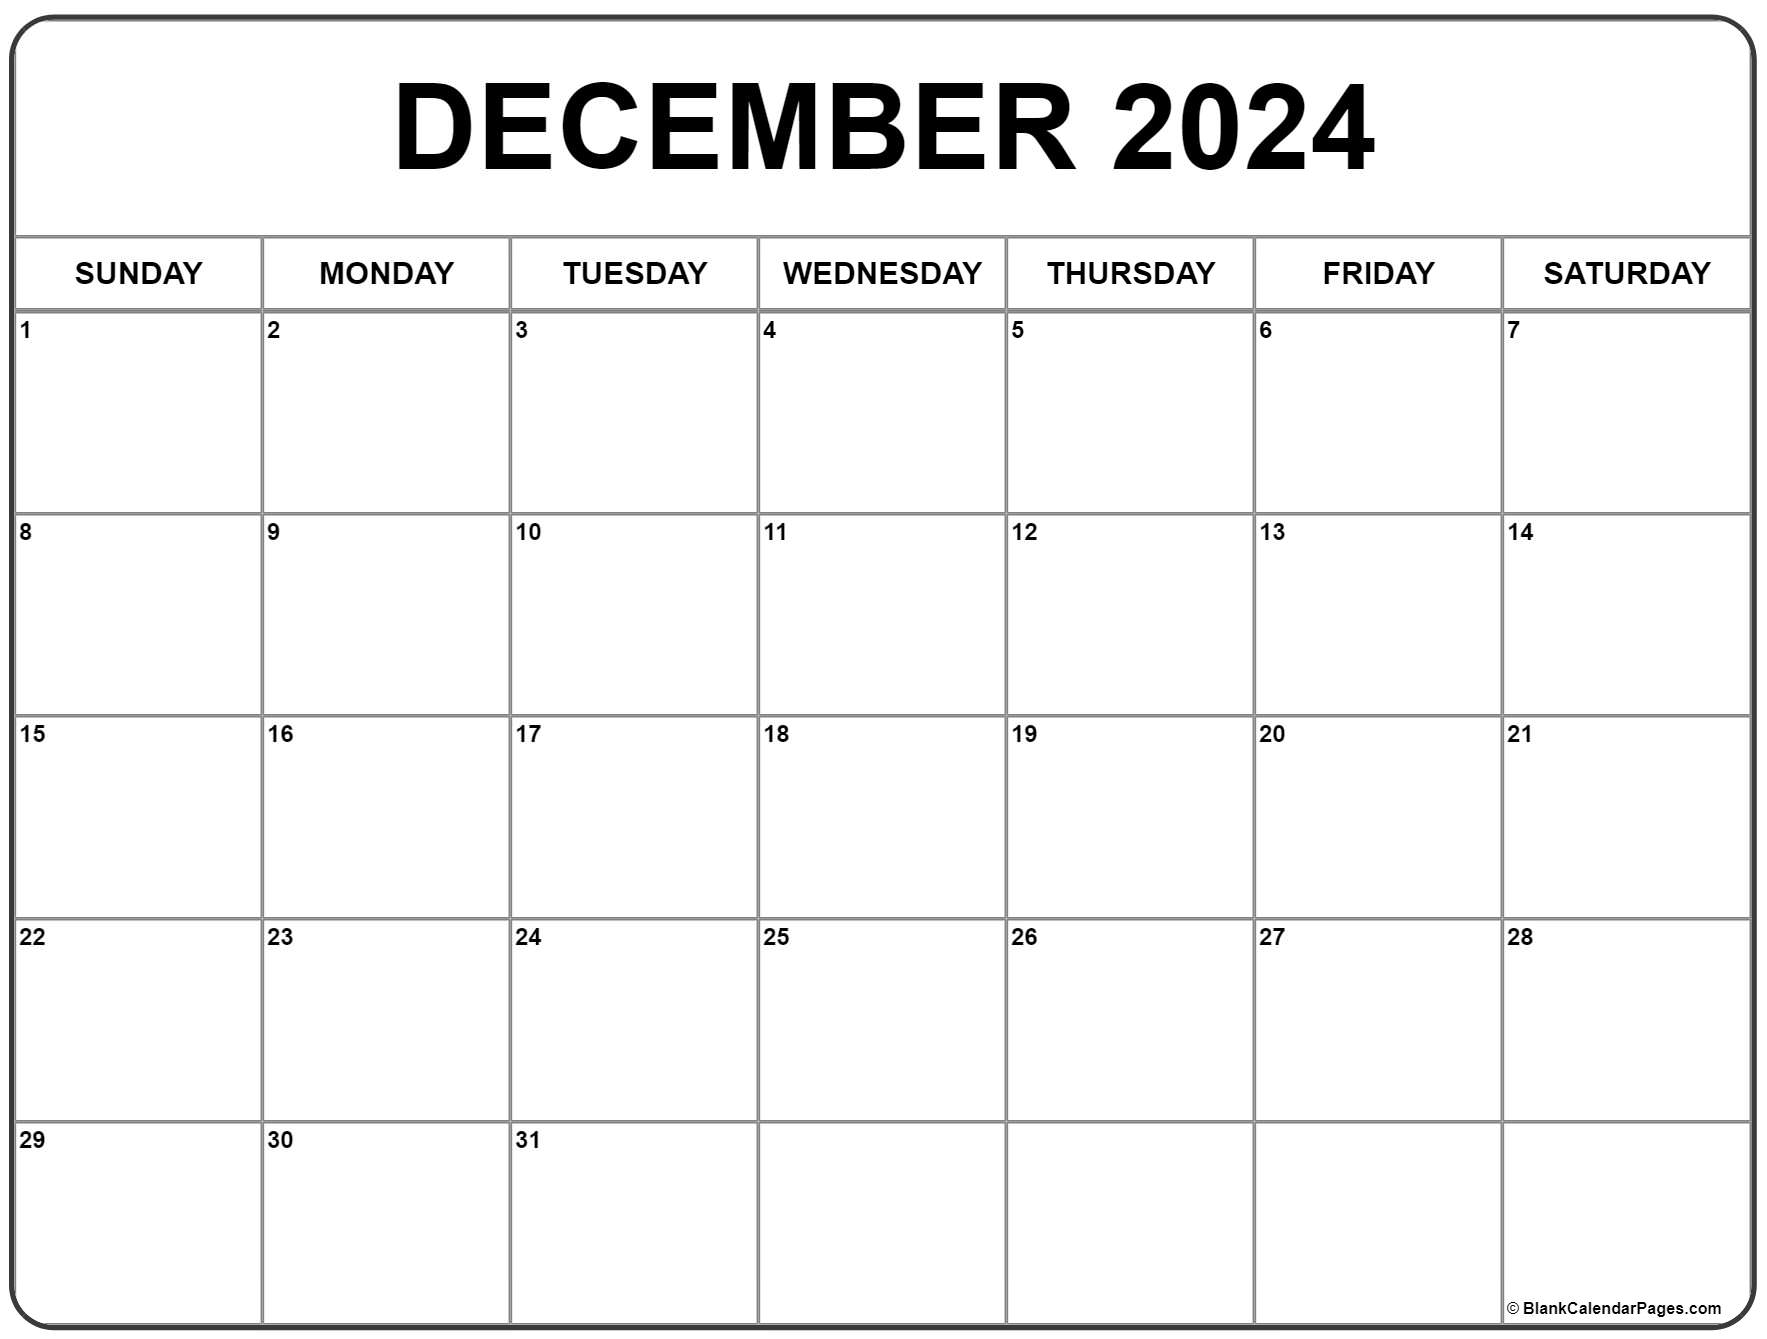 Free Printable Calendar December 2022 December 2022 Calendar | Free Printable Calendar Templates